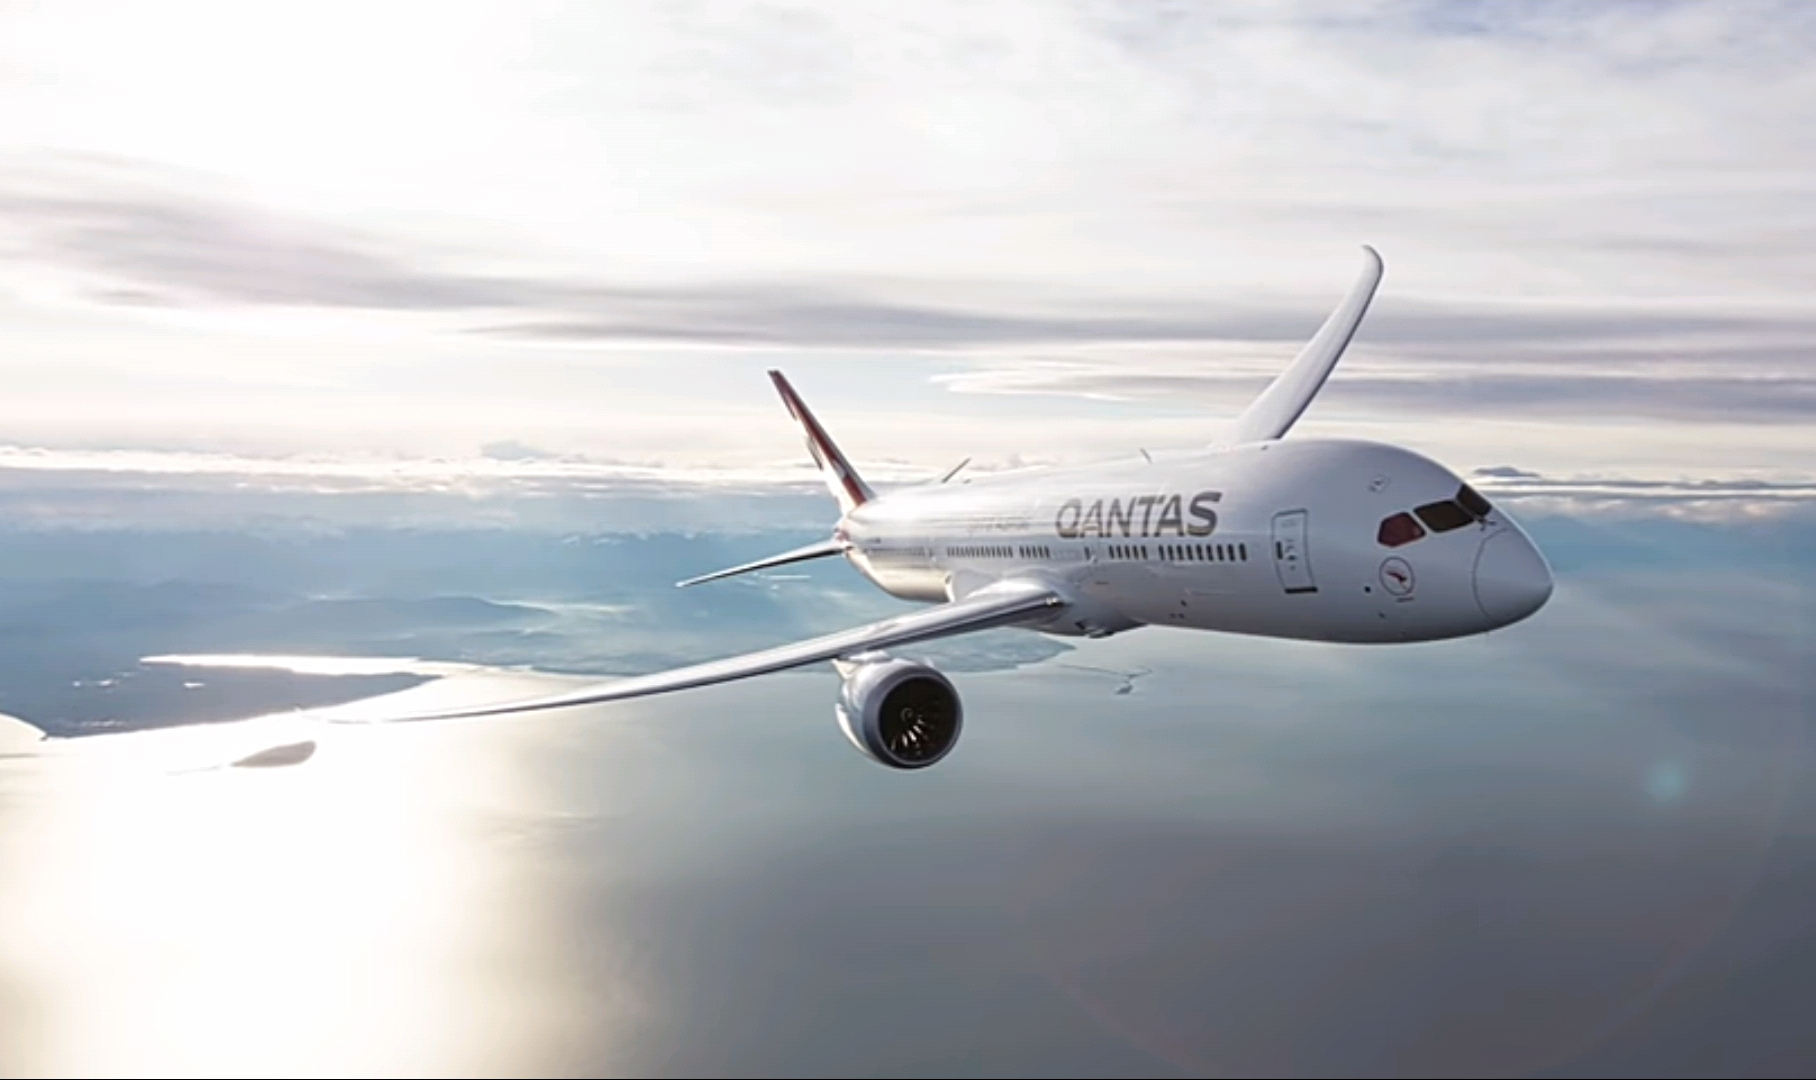 Qantas Boeing 787-9 Dreamliner